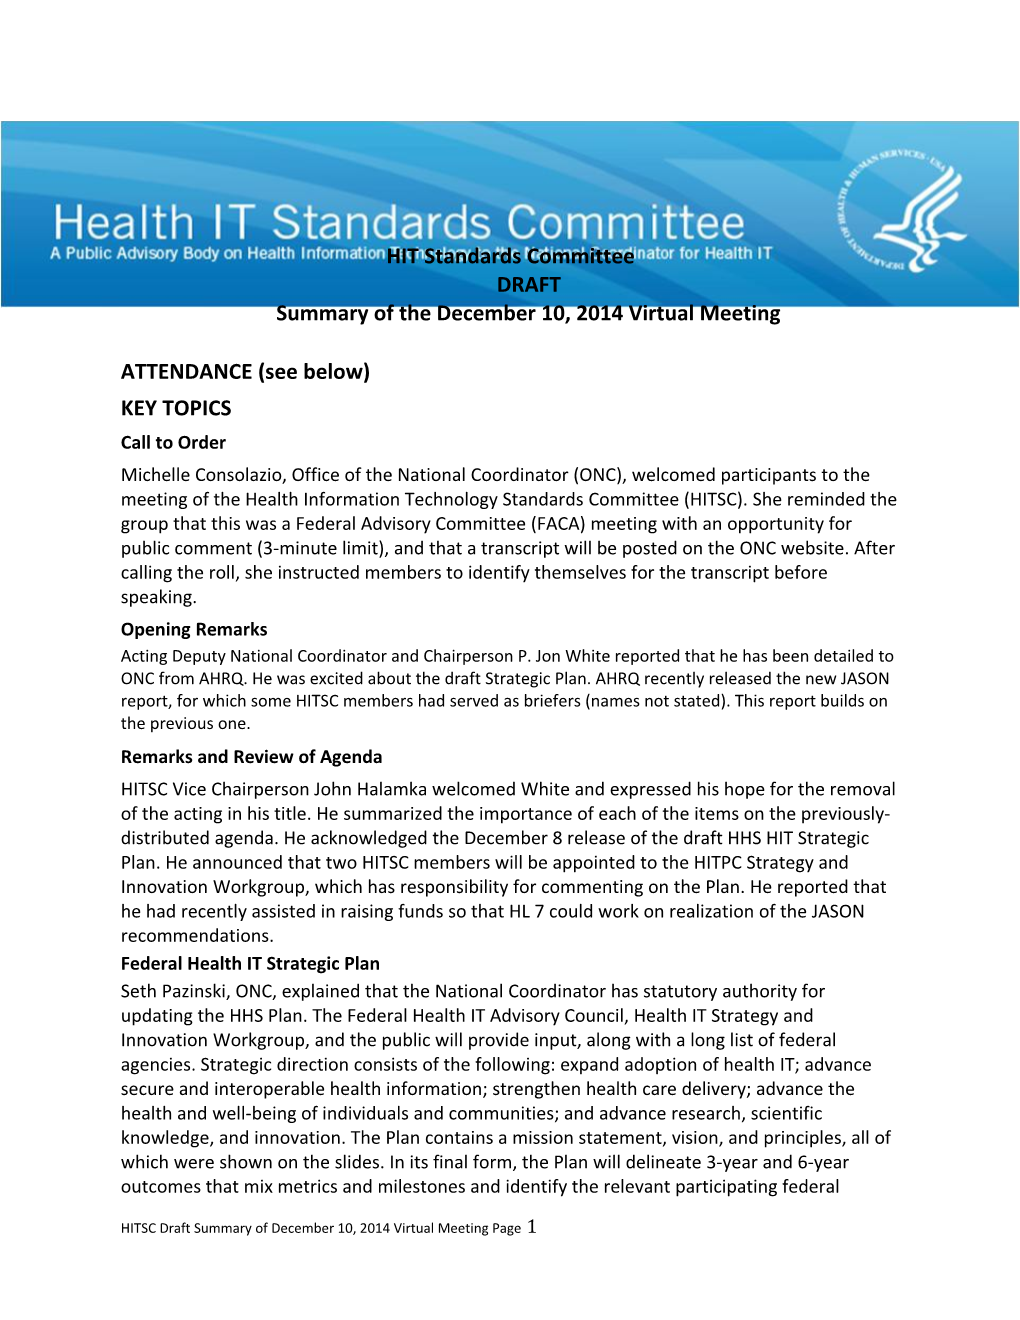 HIT Standards Committeedraftsummary of the December 10, 2014 Virtual Meeting